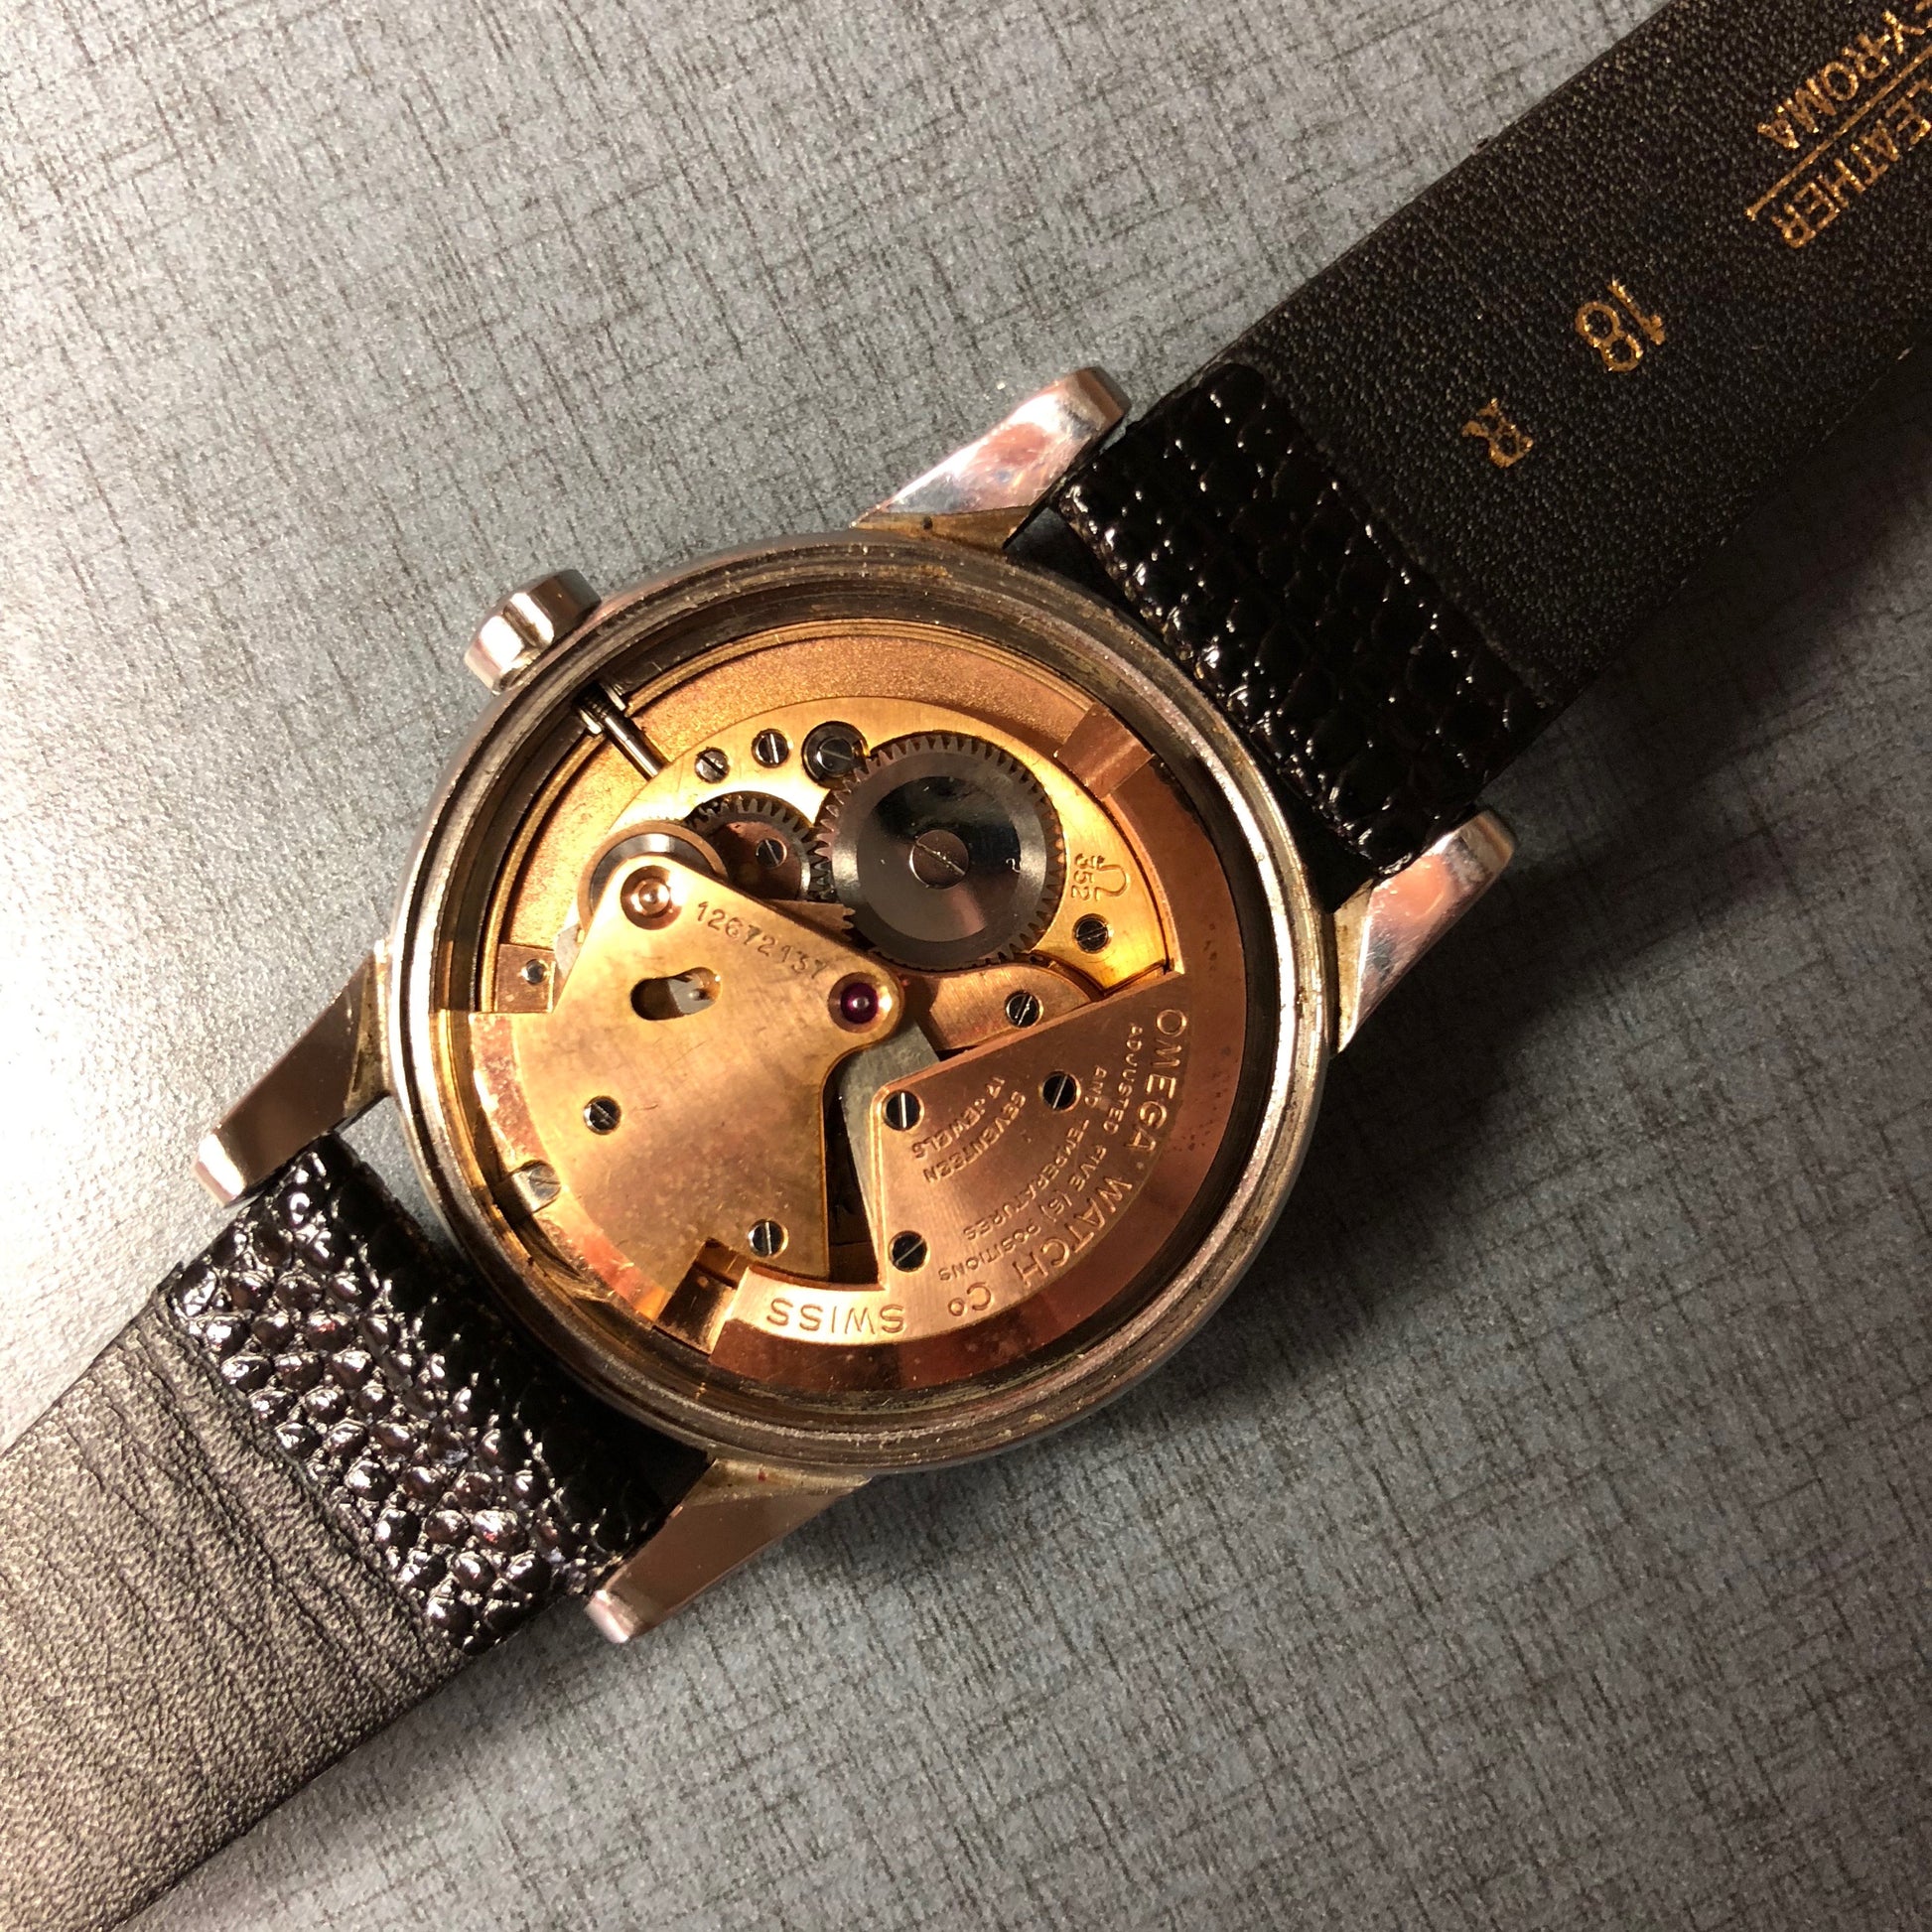 Vintage Omega Seamaster Chronometre 2577 Caliber 352 Bumper Automatic Wristwatch Box Papers 1952 - Hashtag Watch Company